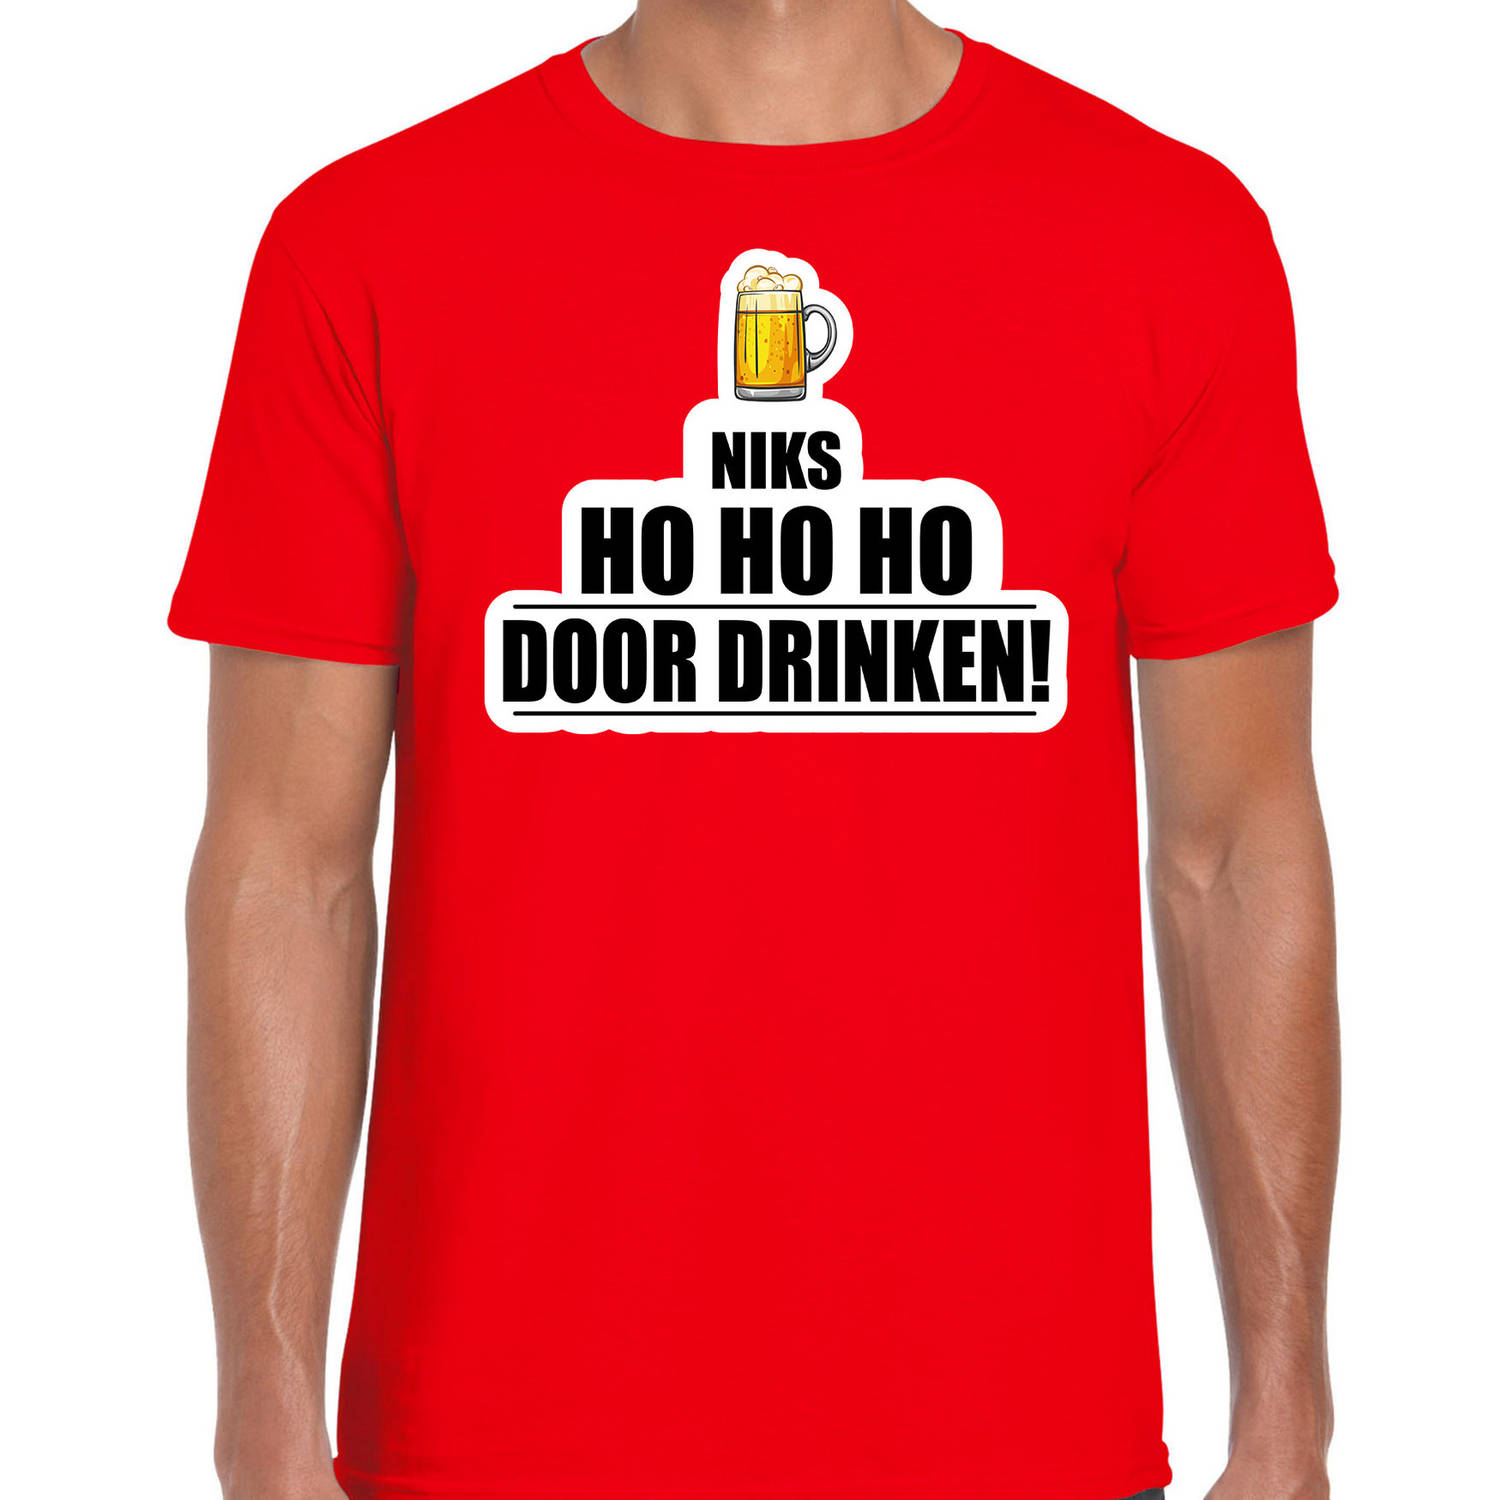 Niks ho ho ho bier doordrinken foute Kerst t-shirt rood voor heren M - kerst t-shirts